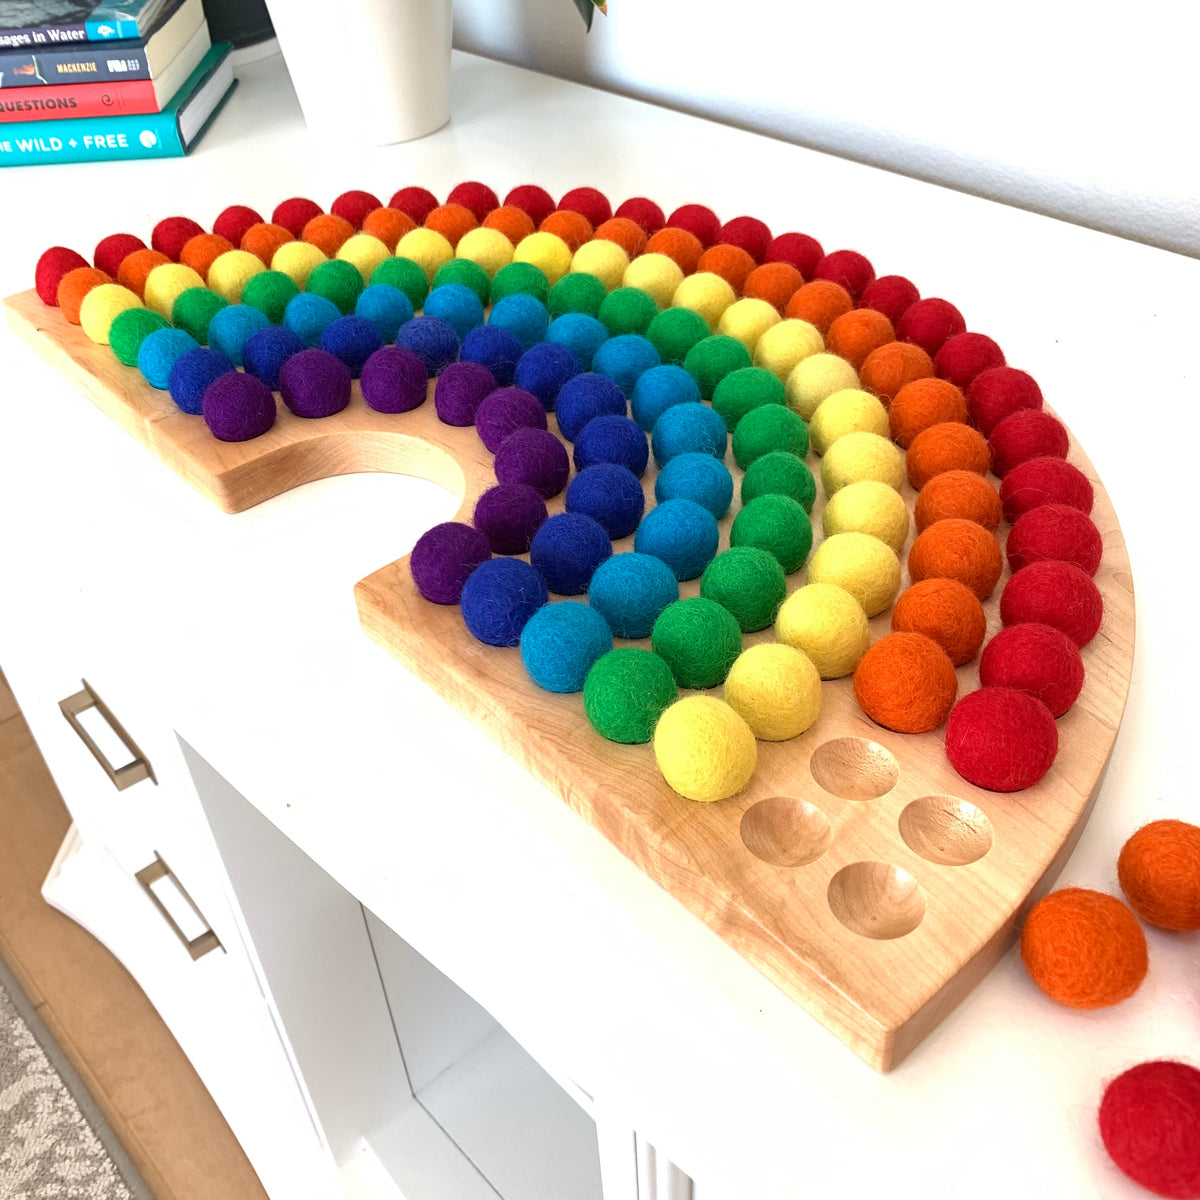 Reversible Rainbow Board